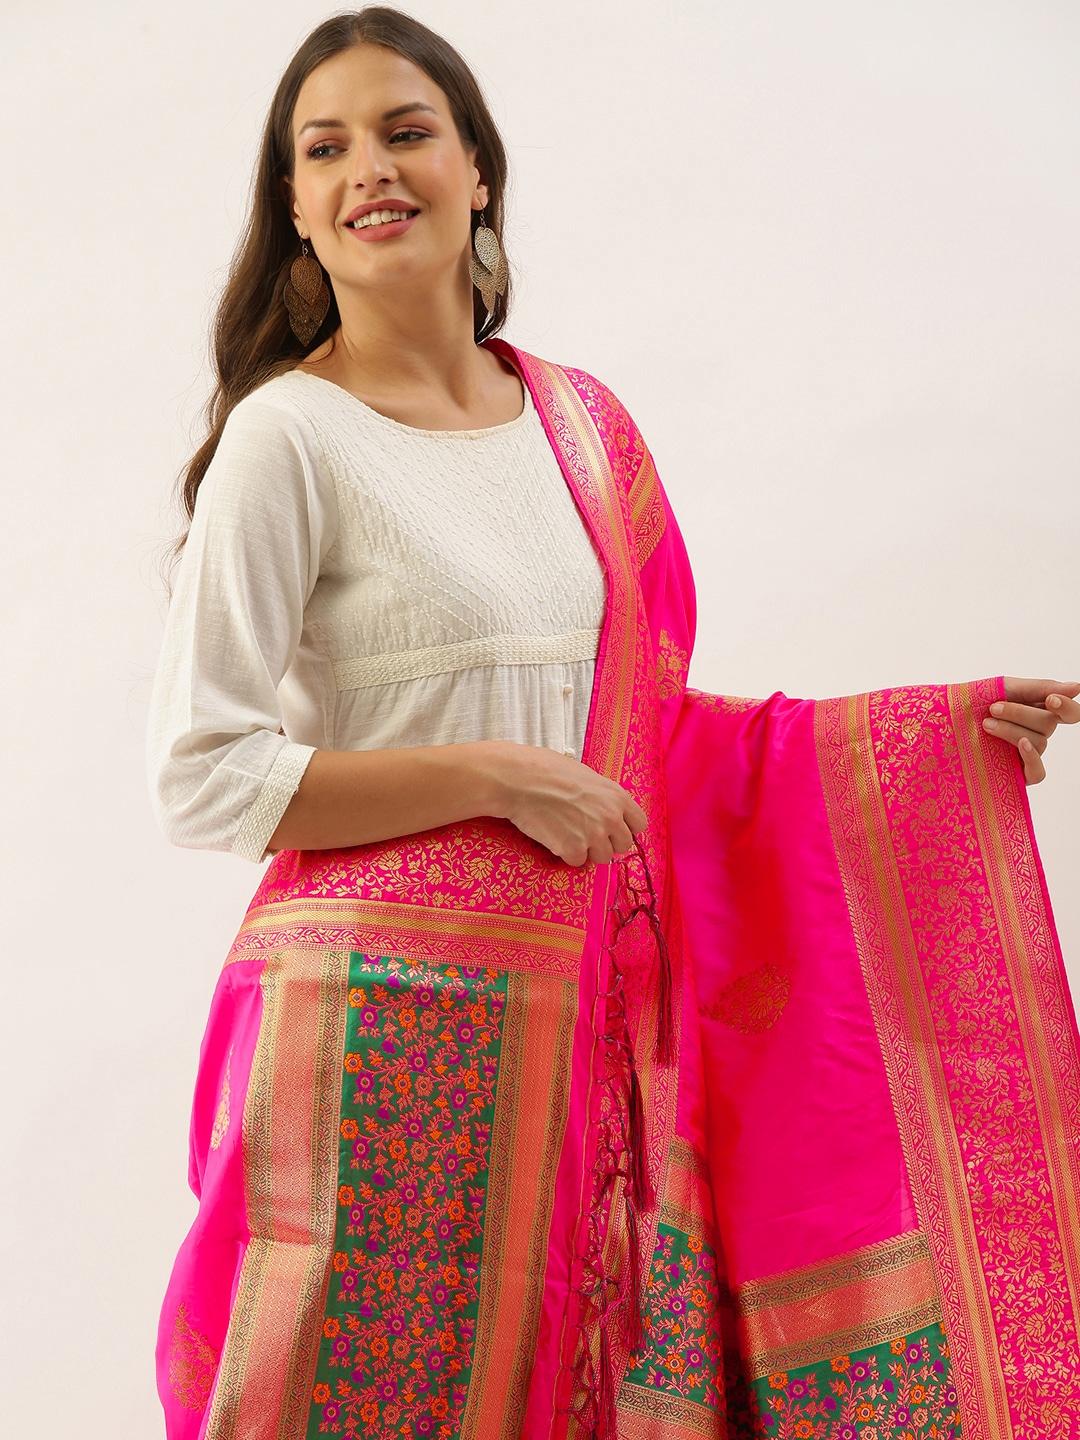 SANGAM PRINTS Pink & Golden Ethnic Motifs Woven Design Dupatta with Tassel Detail